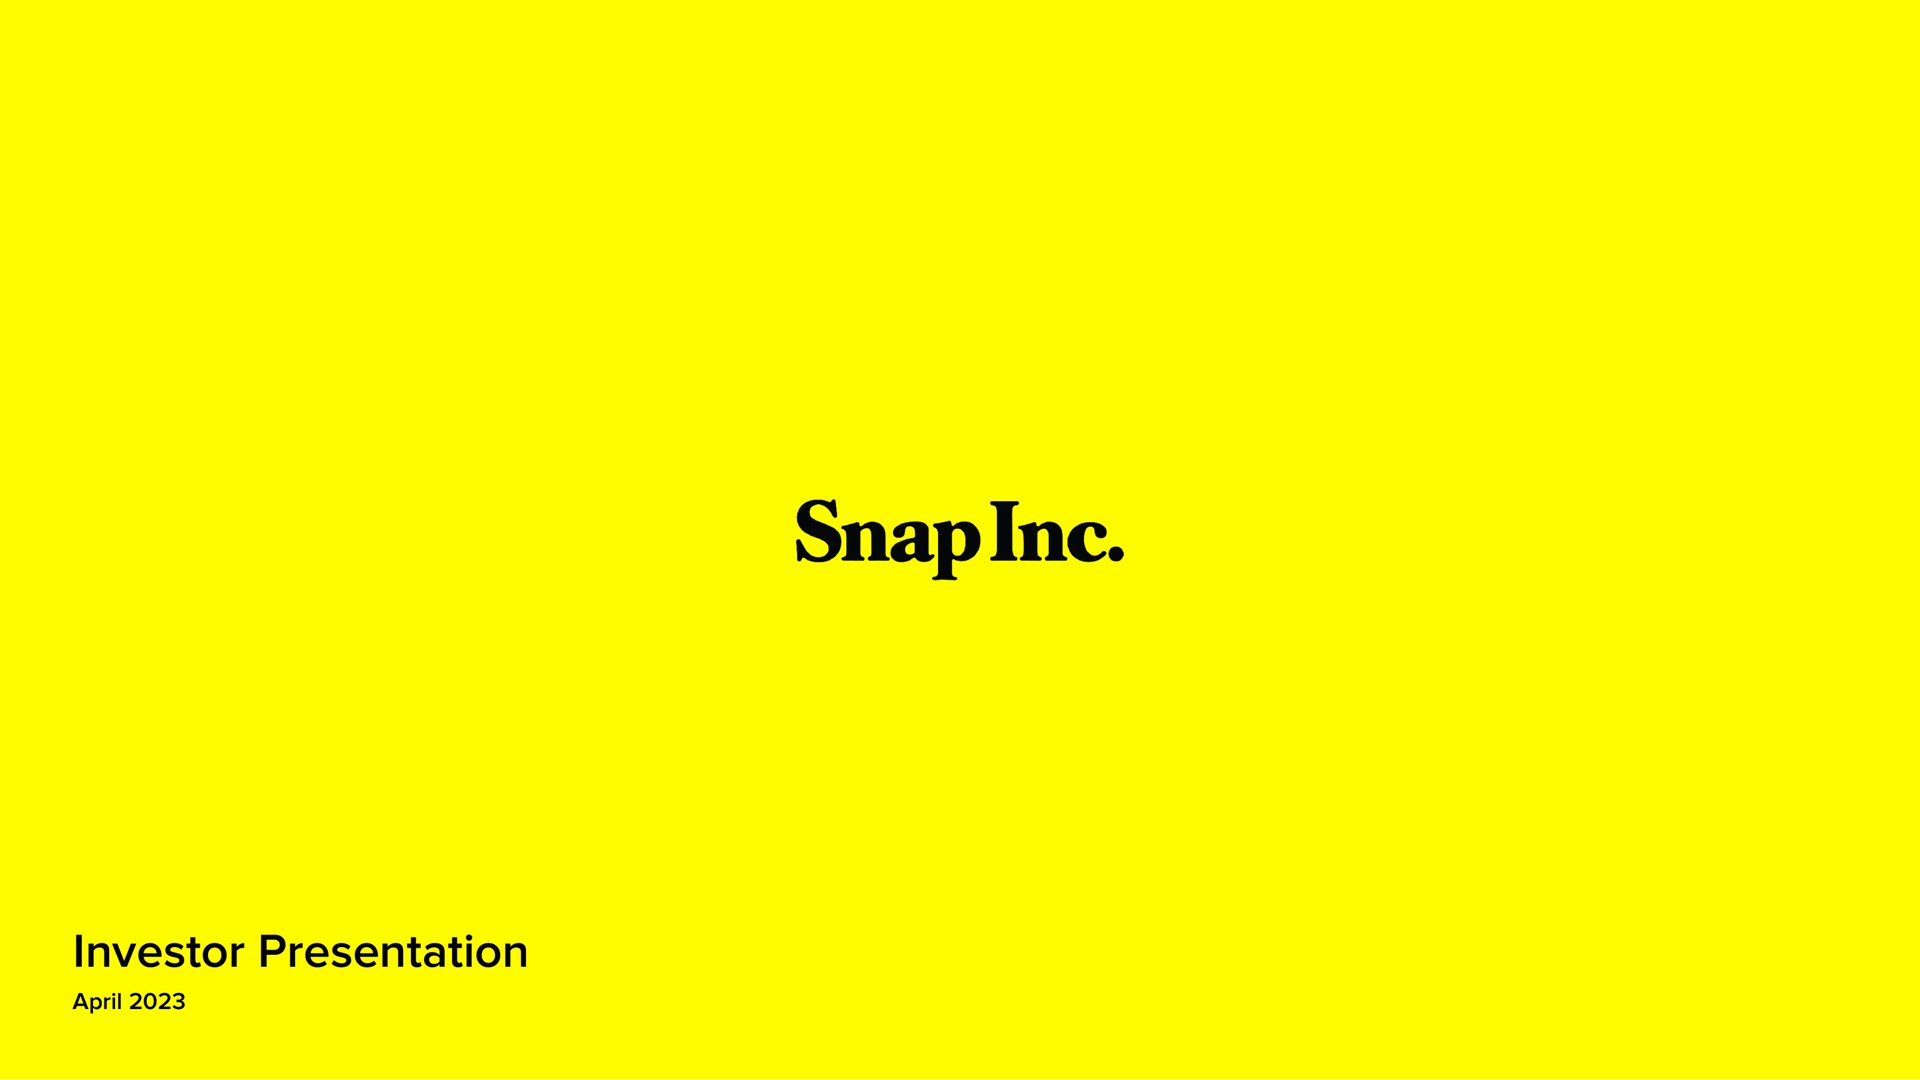 snap investor presentation | Snap Inc